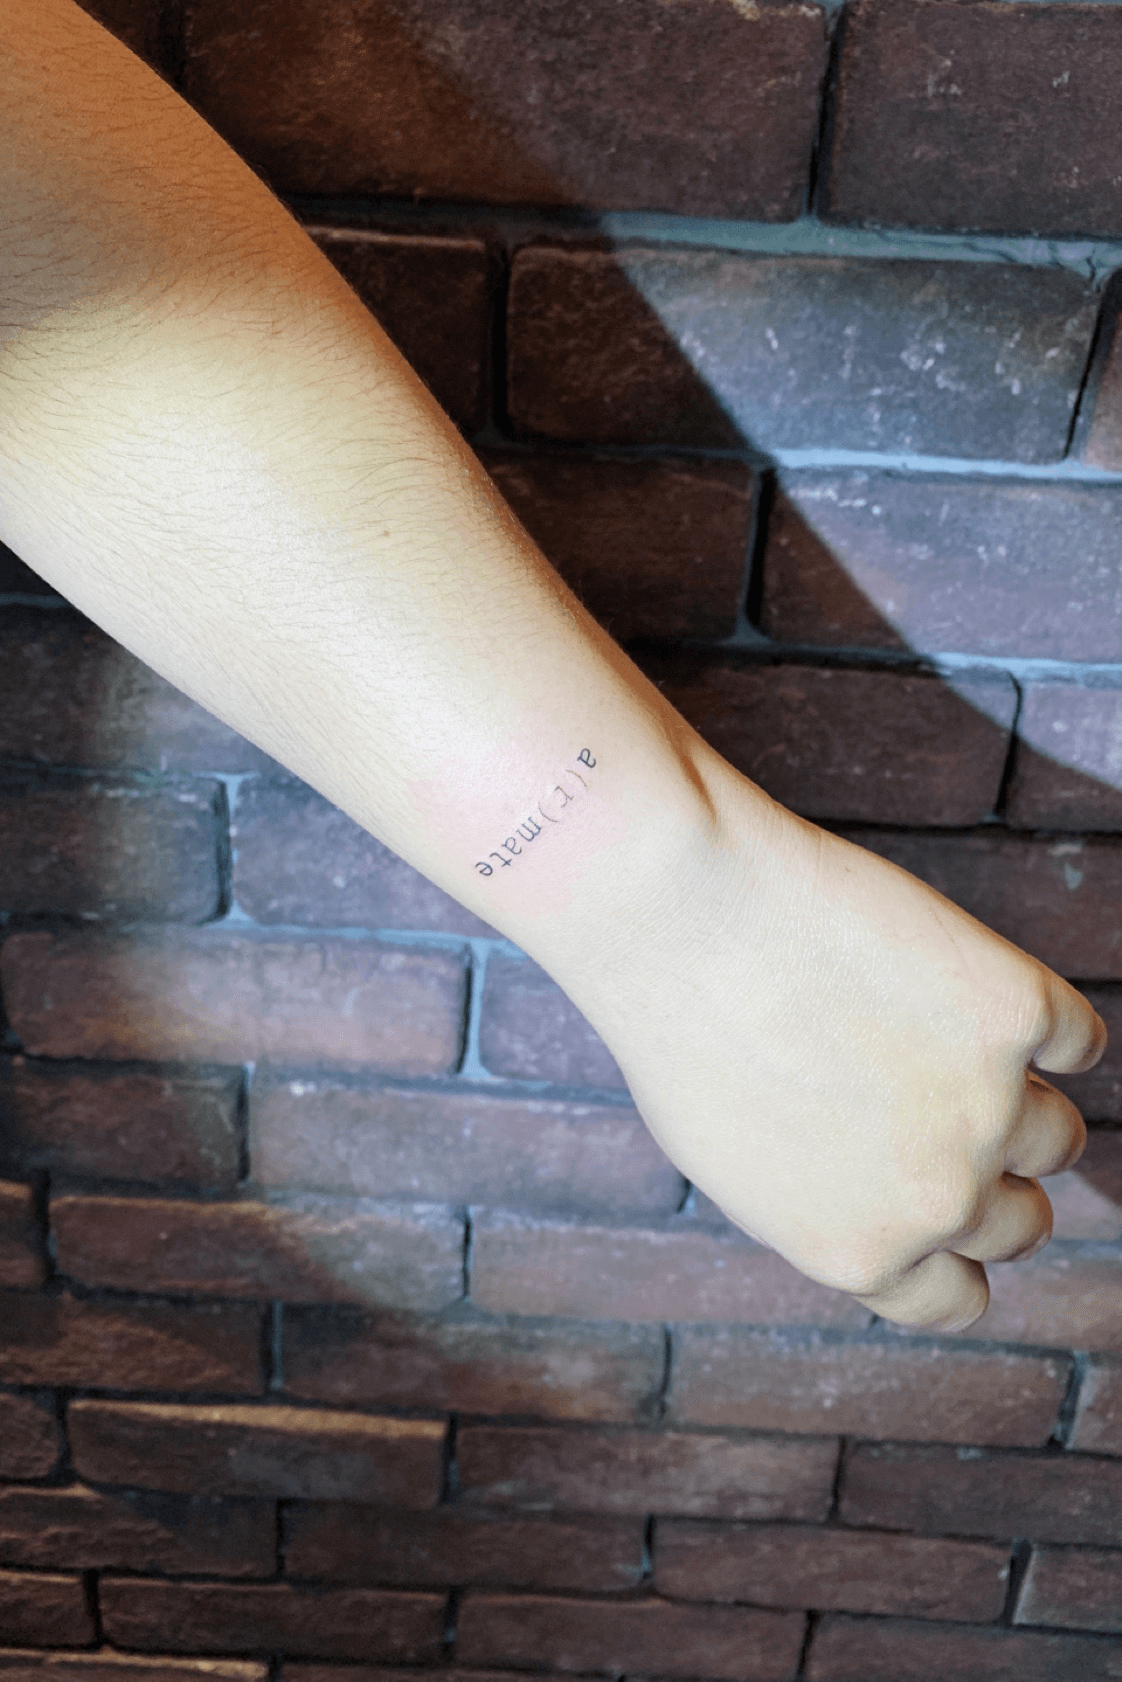 Typewriter smile tattoo on the wrist